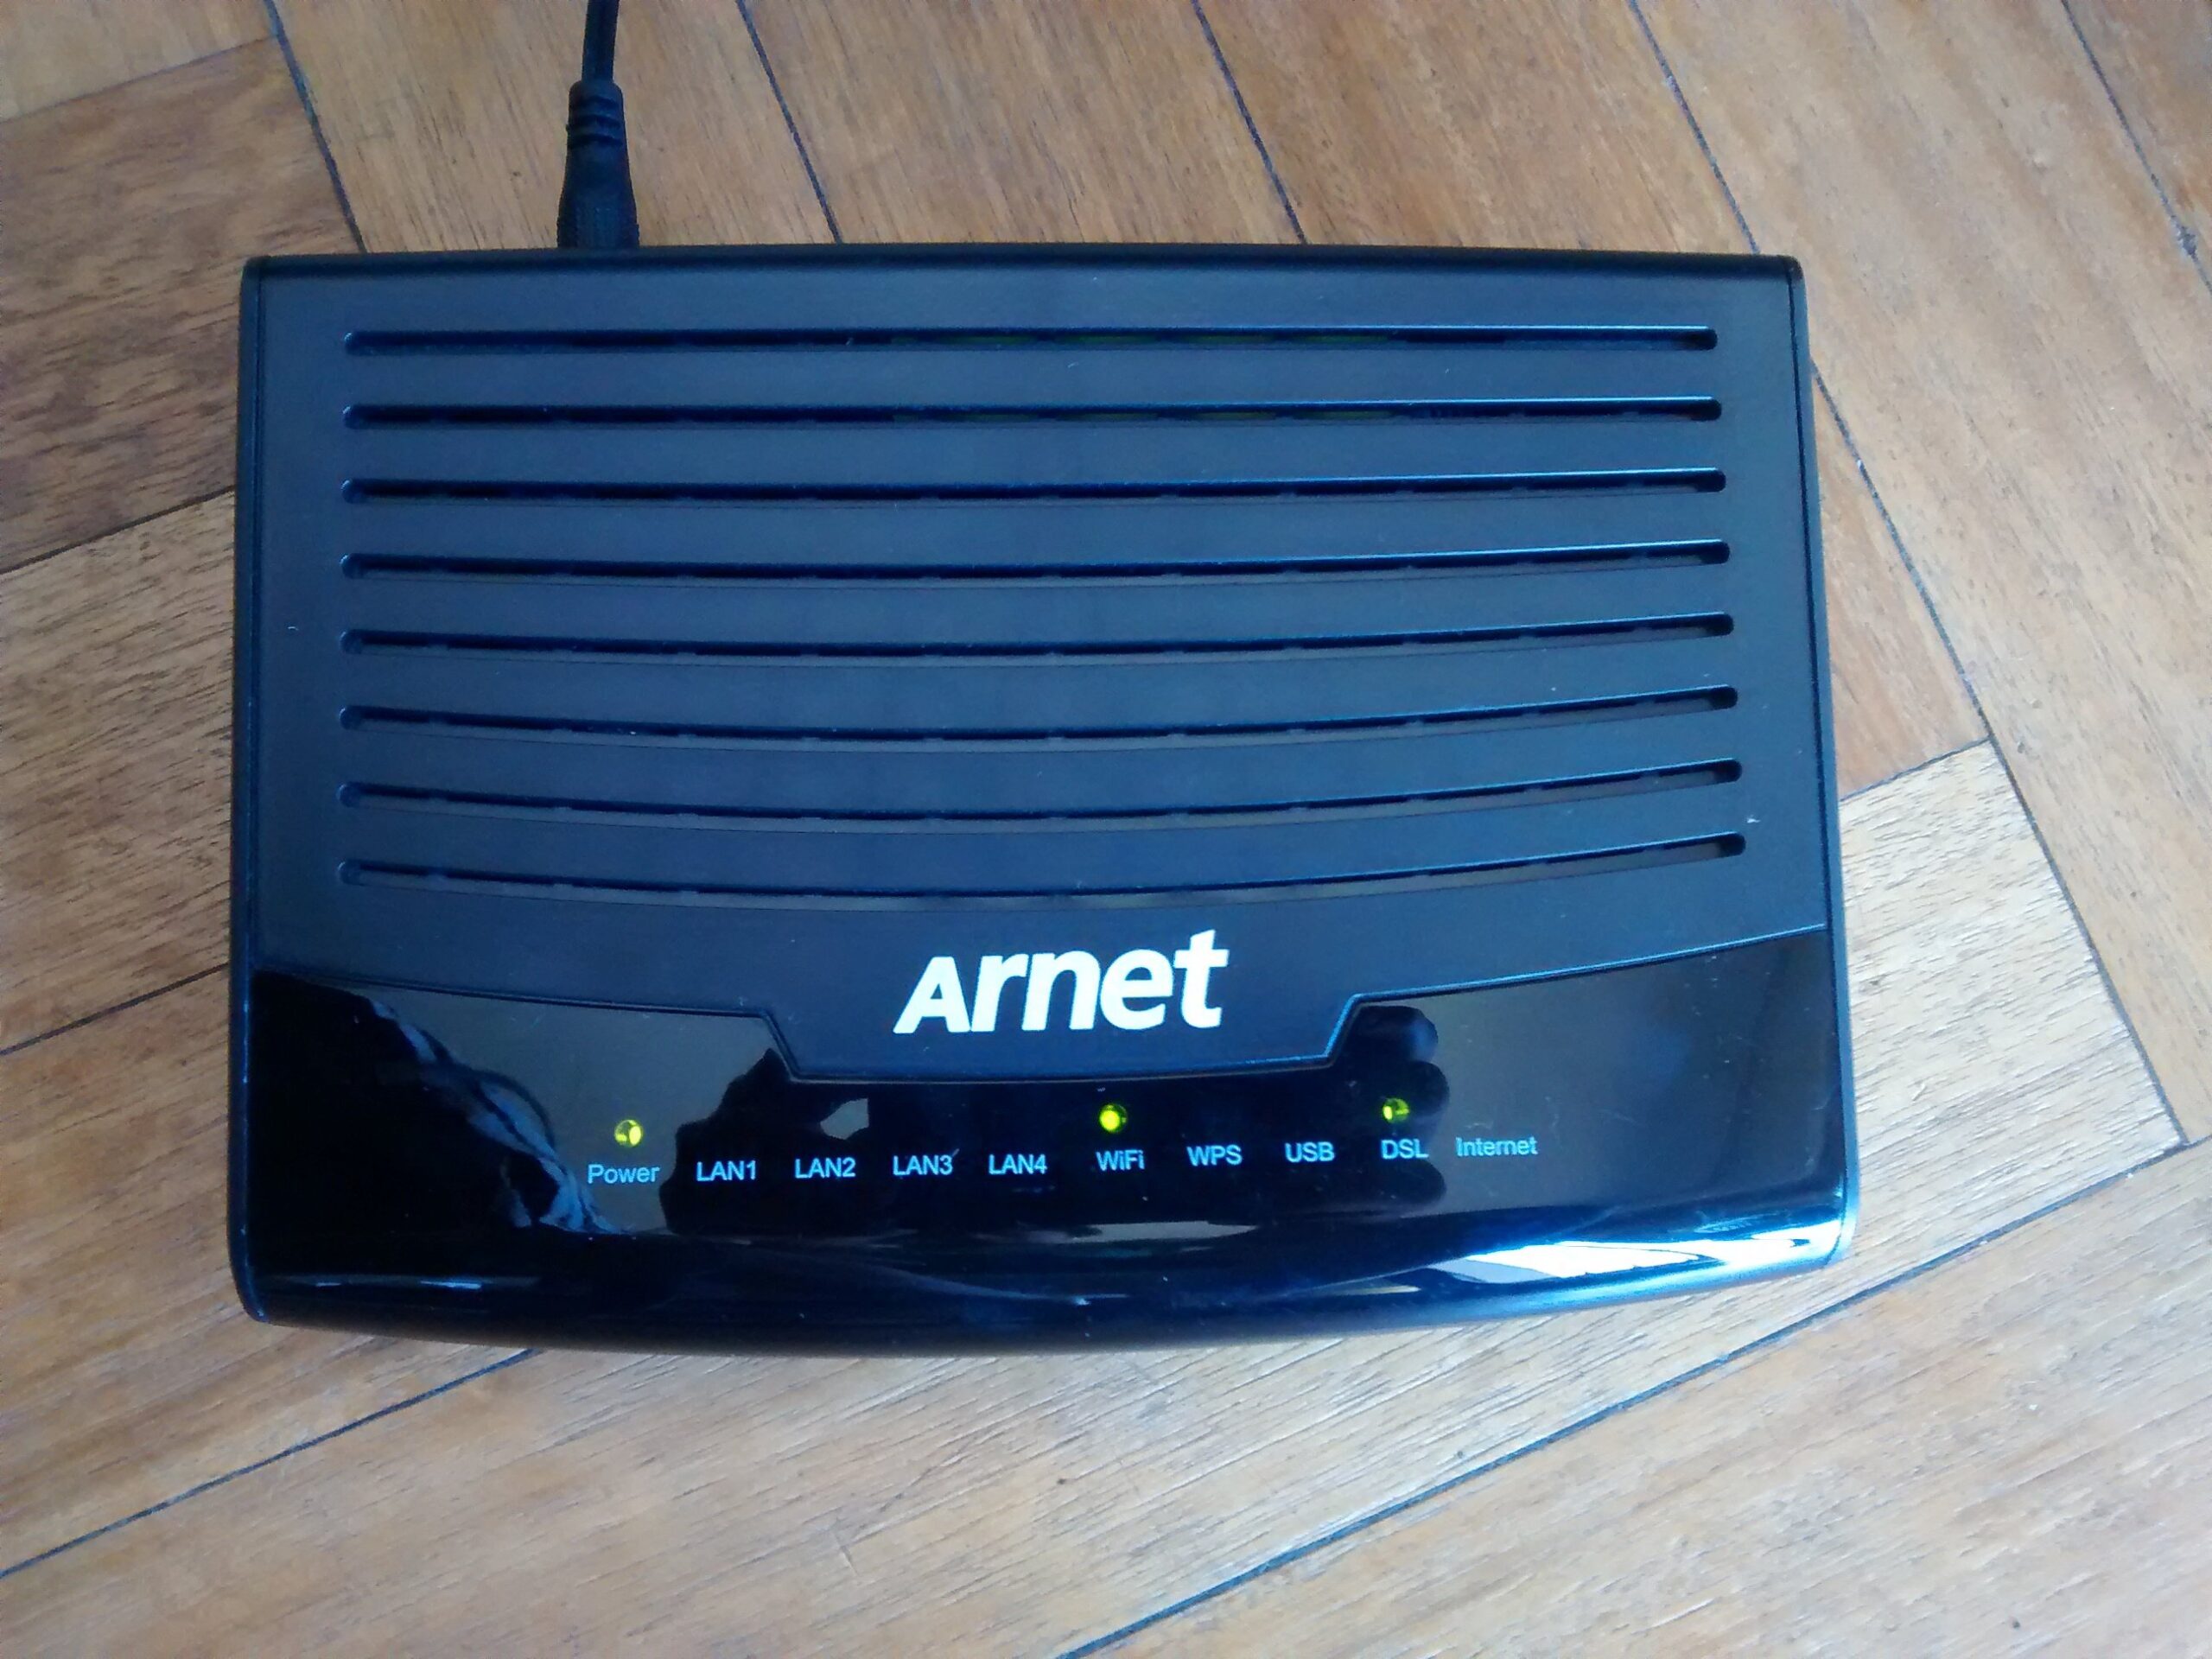 Configurar módem Arnet wifi